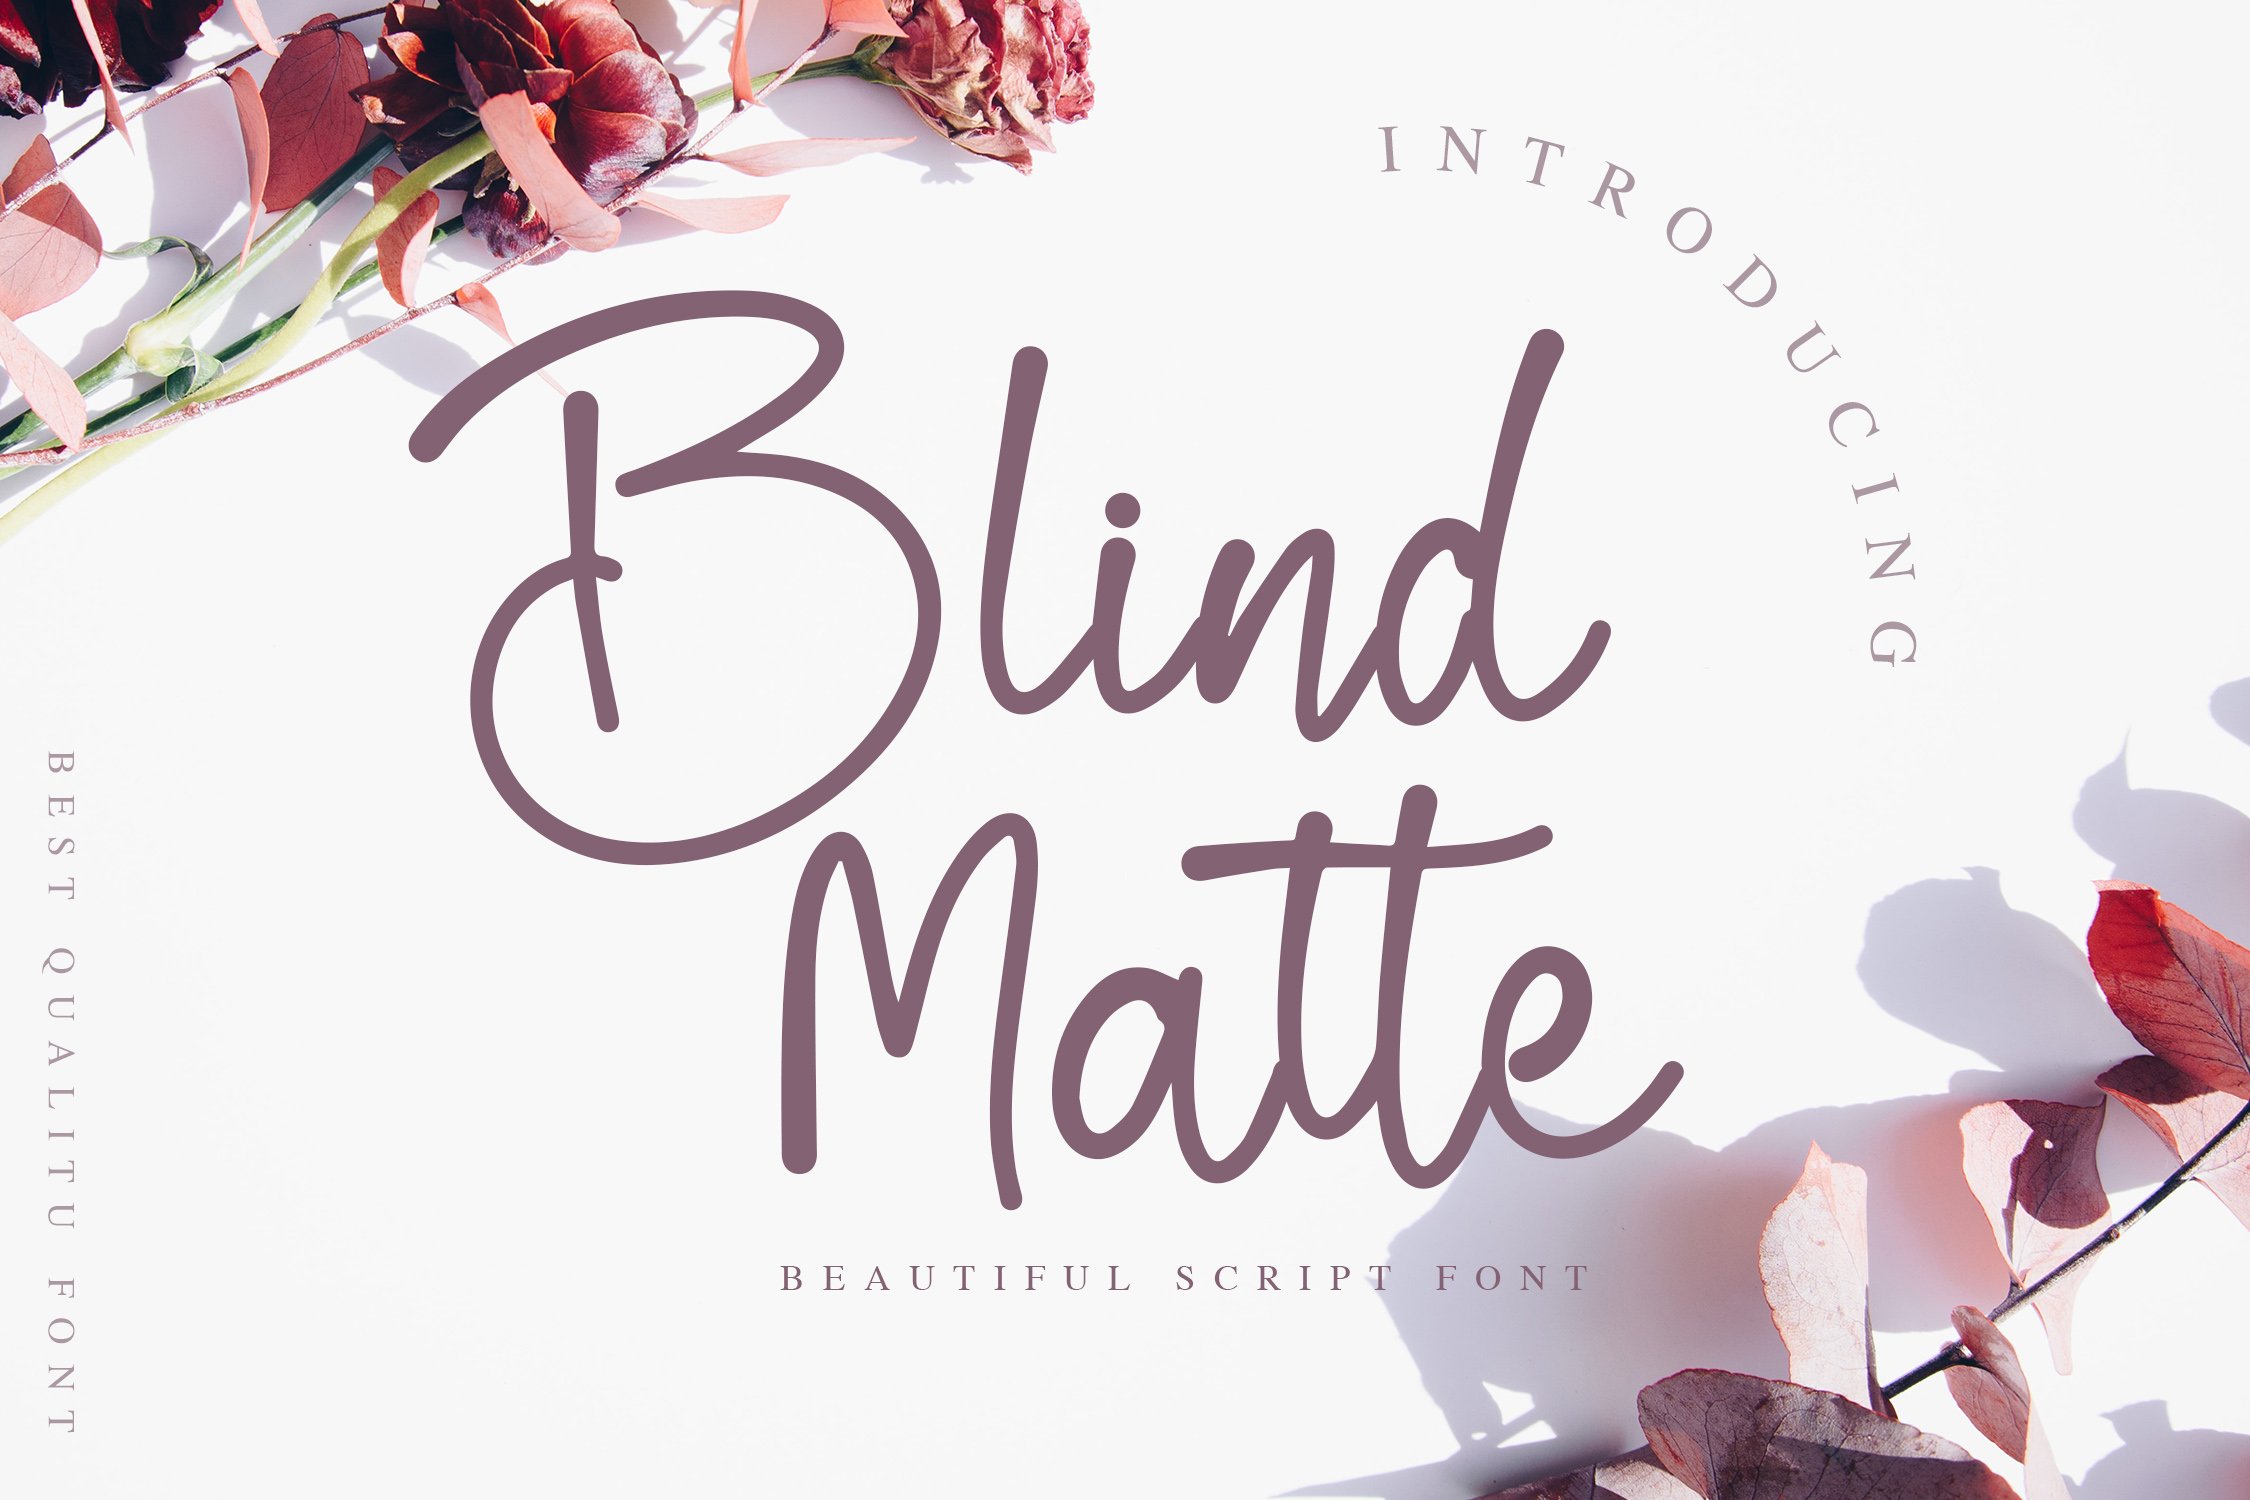 Blind Matte - Script Font cover image.